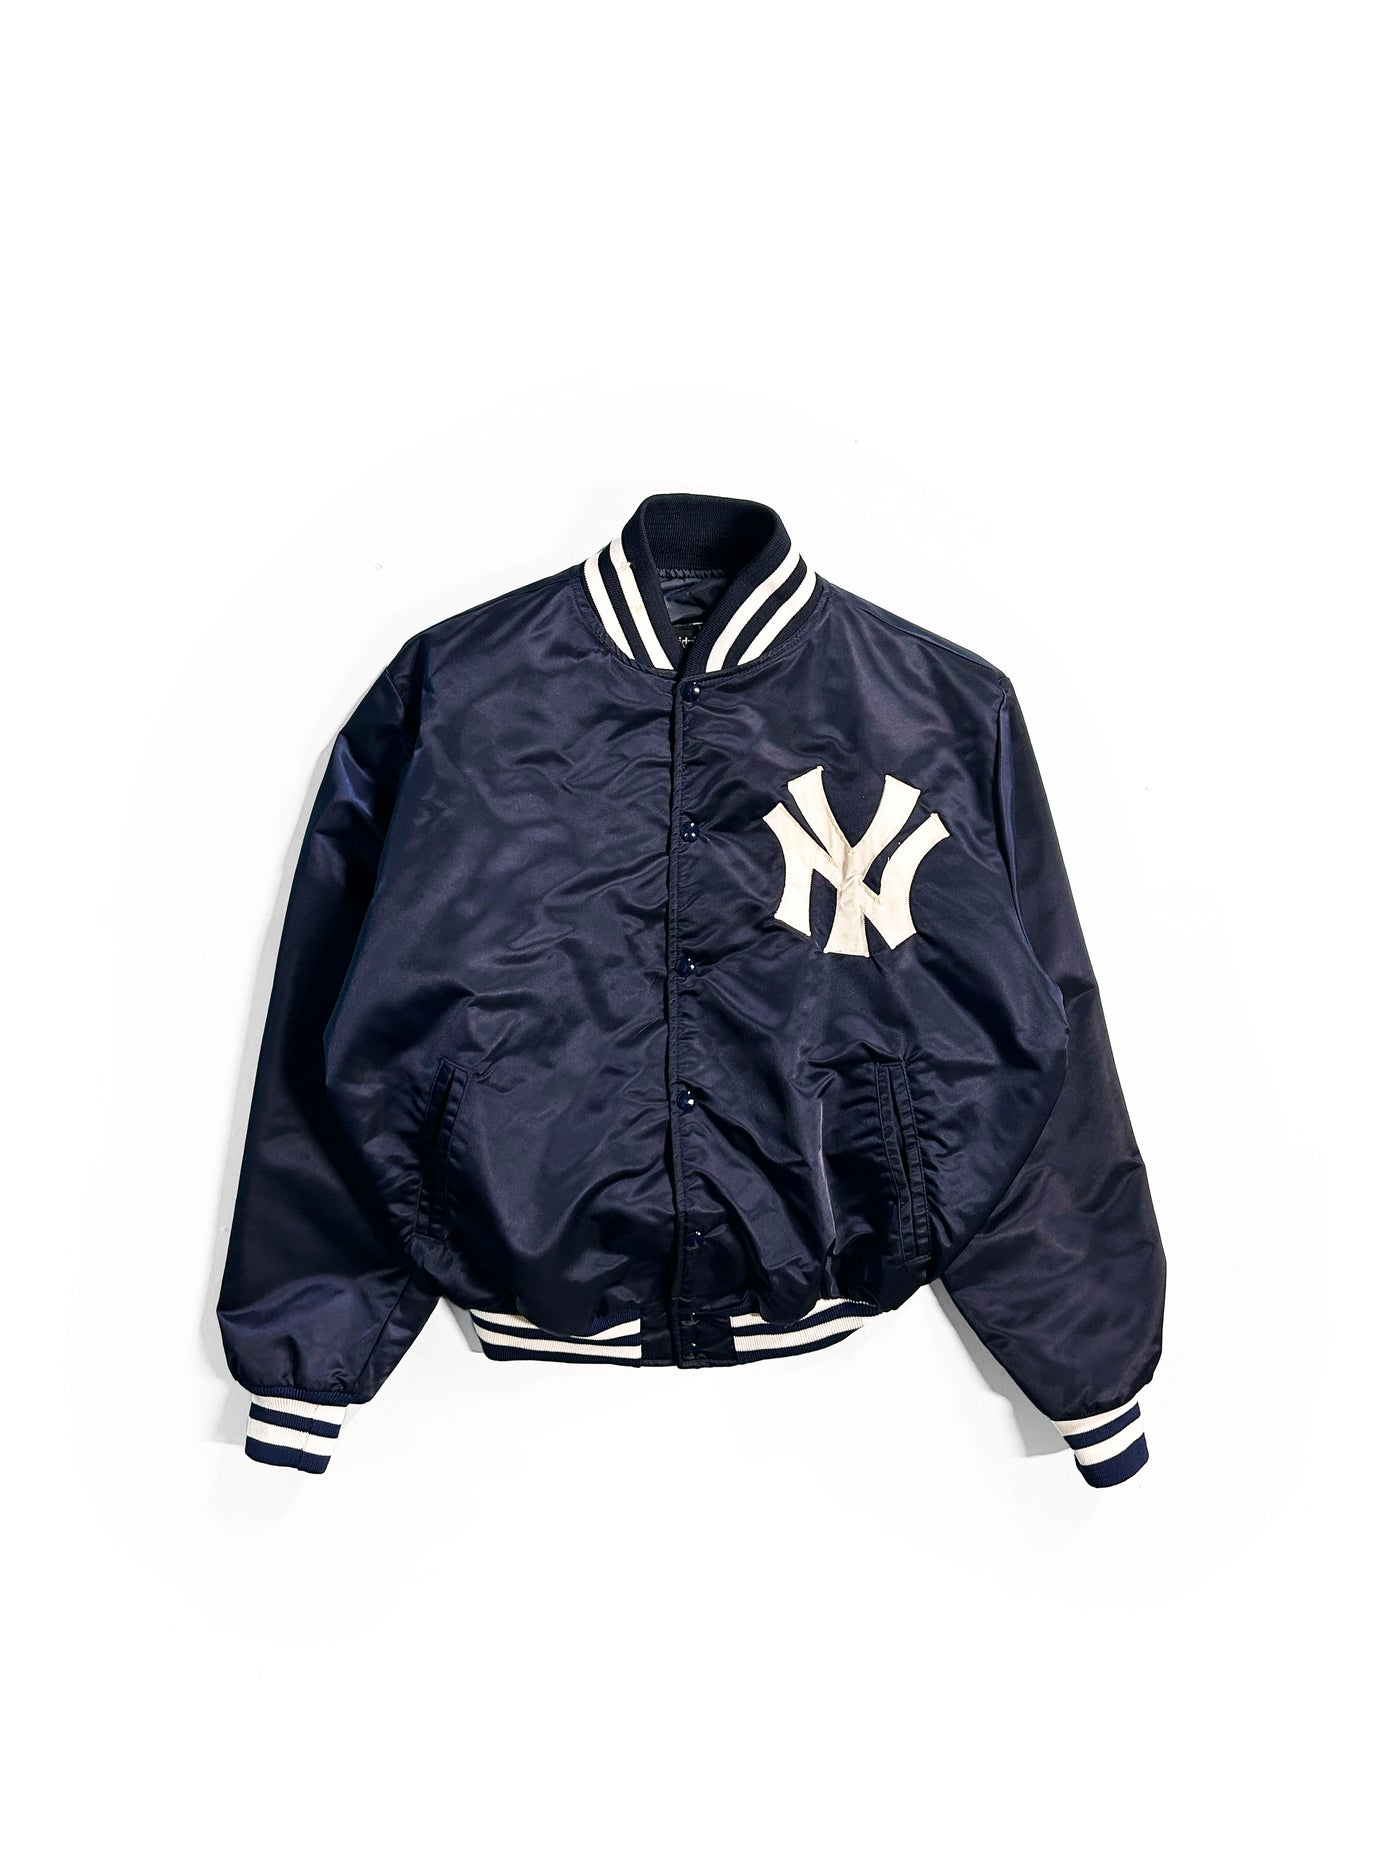 Vintage 90s New York Yankees Bomber Jacket